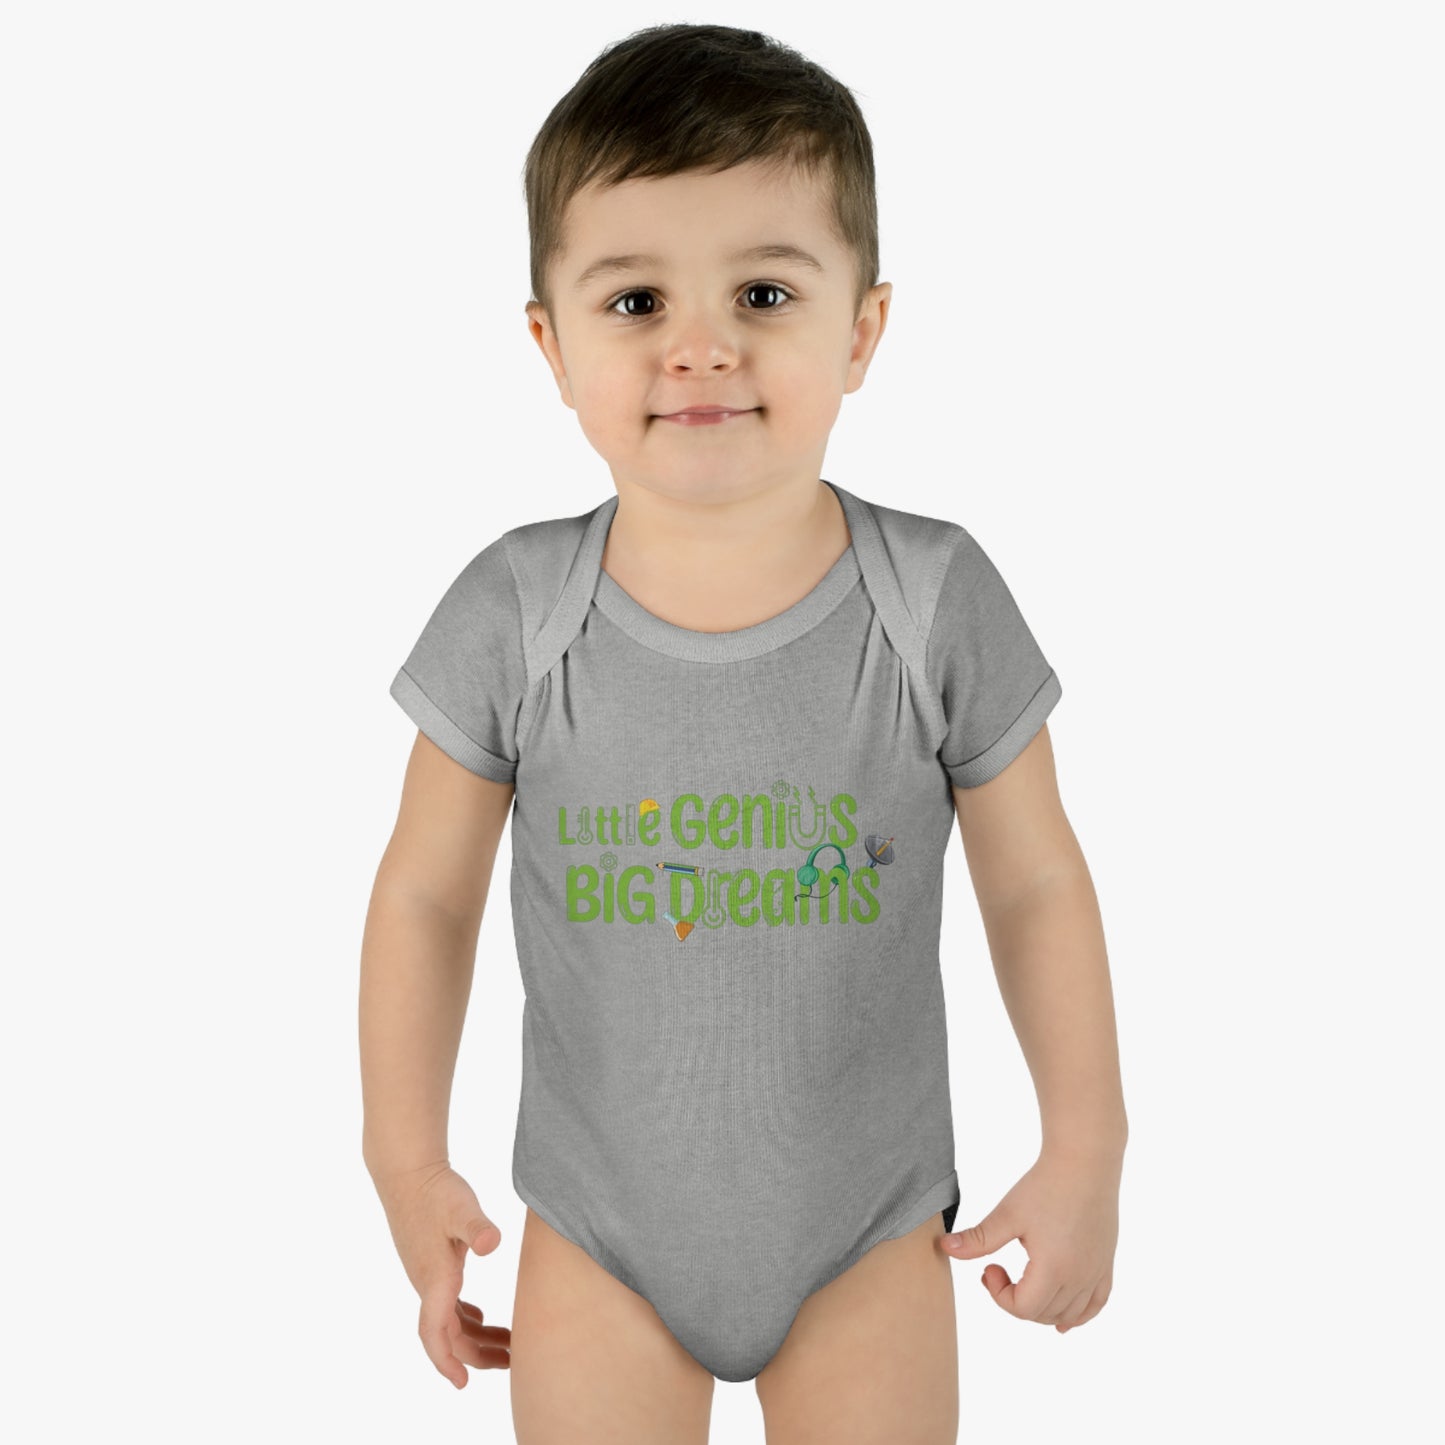 Little Genius Big Dreams - Infant Baby Rib Bodysuit